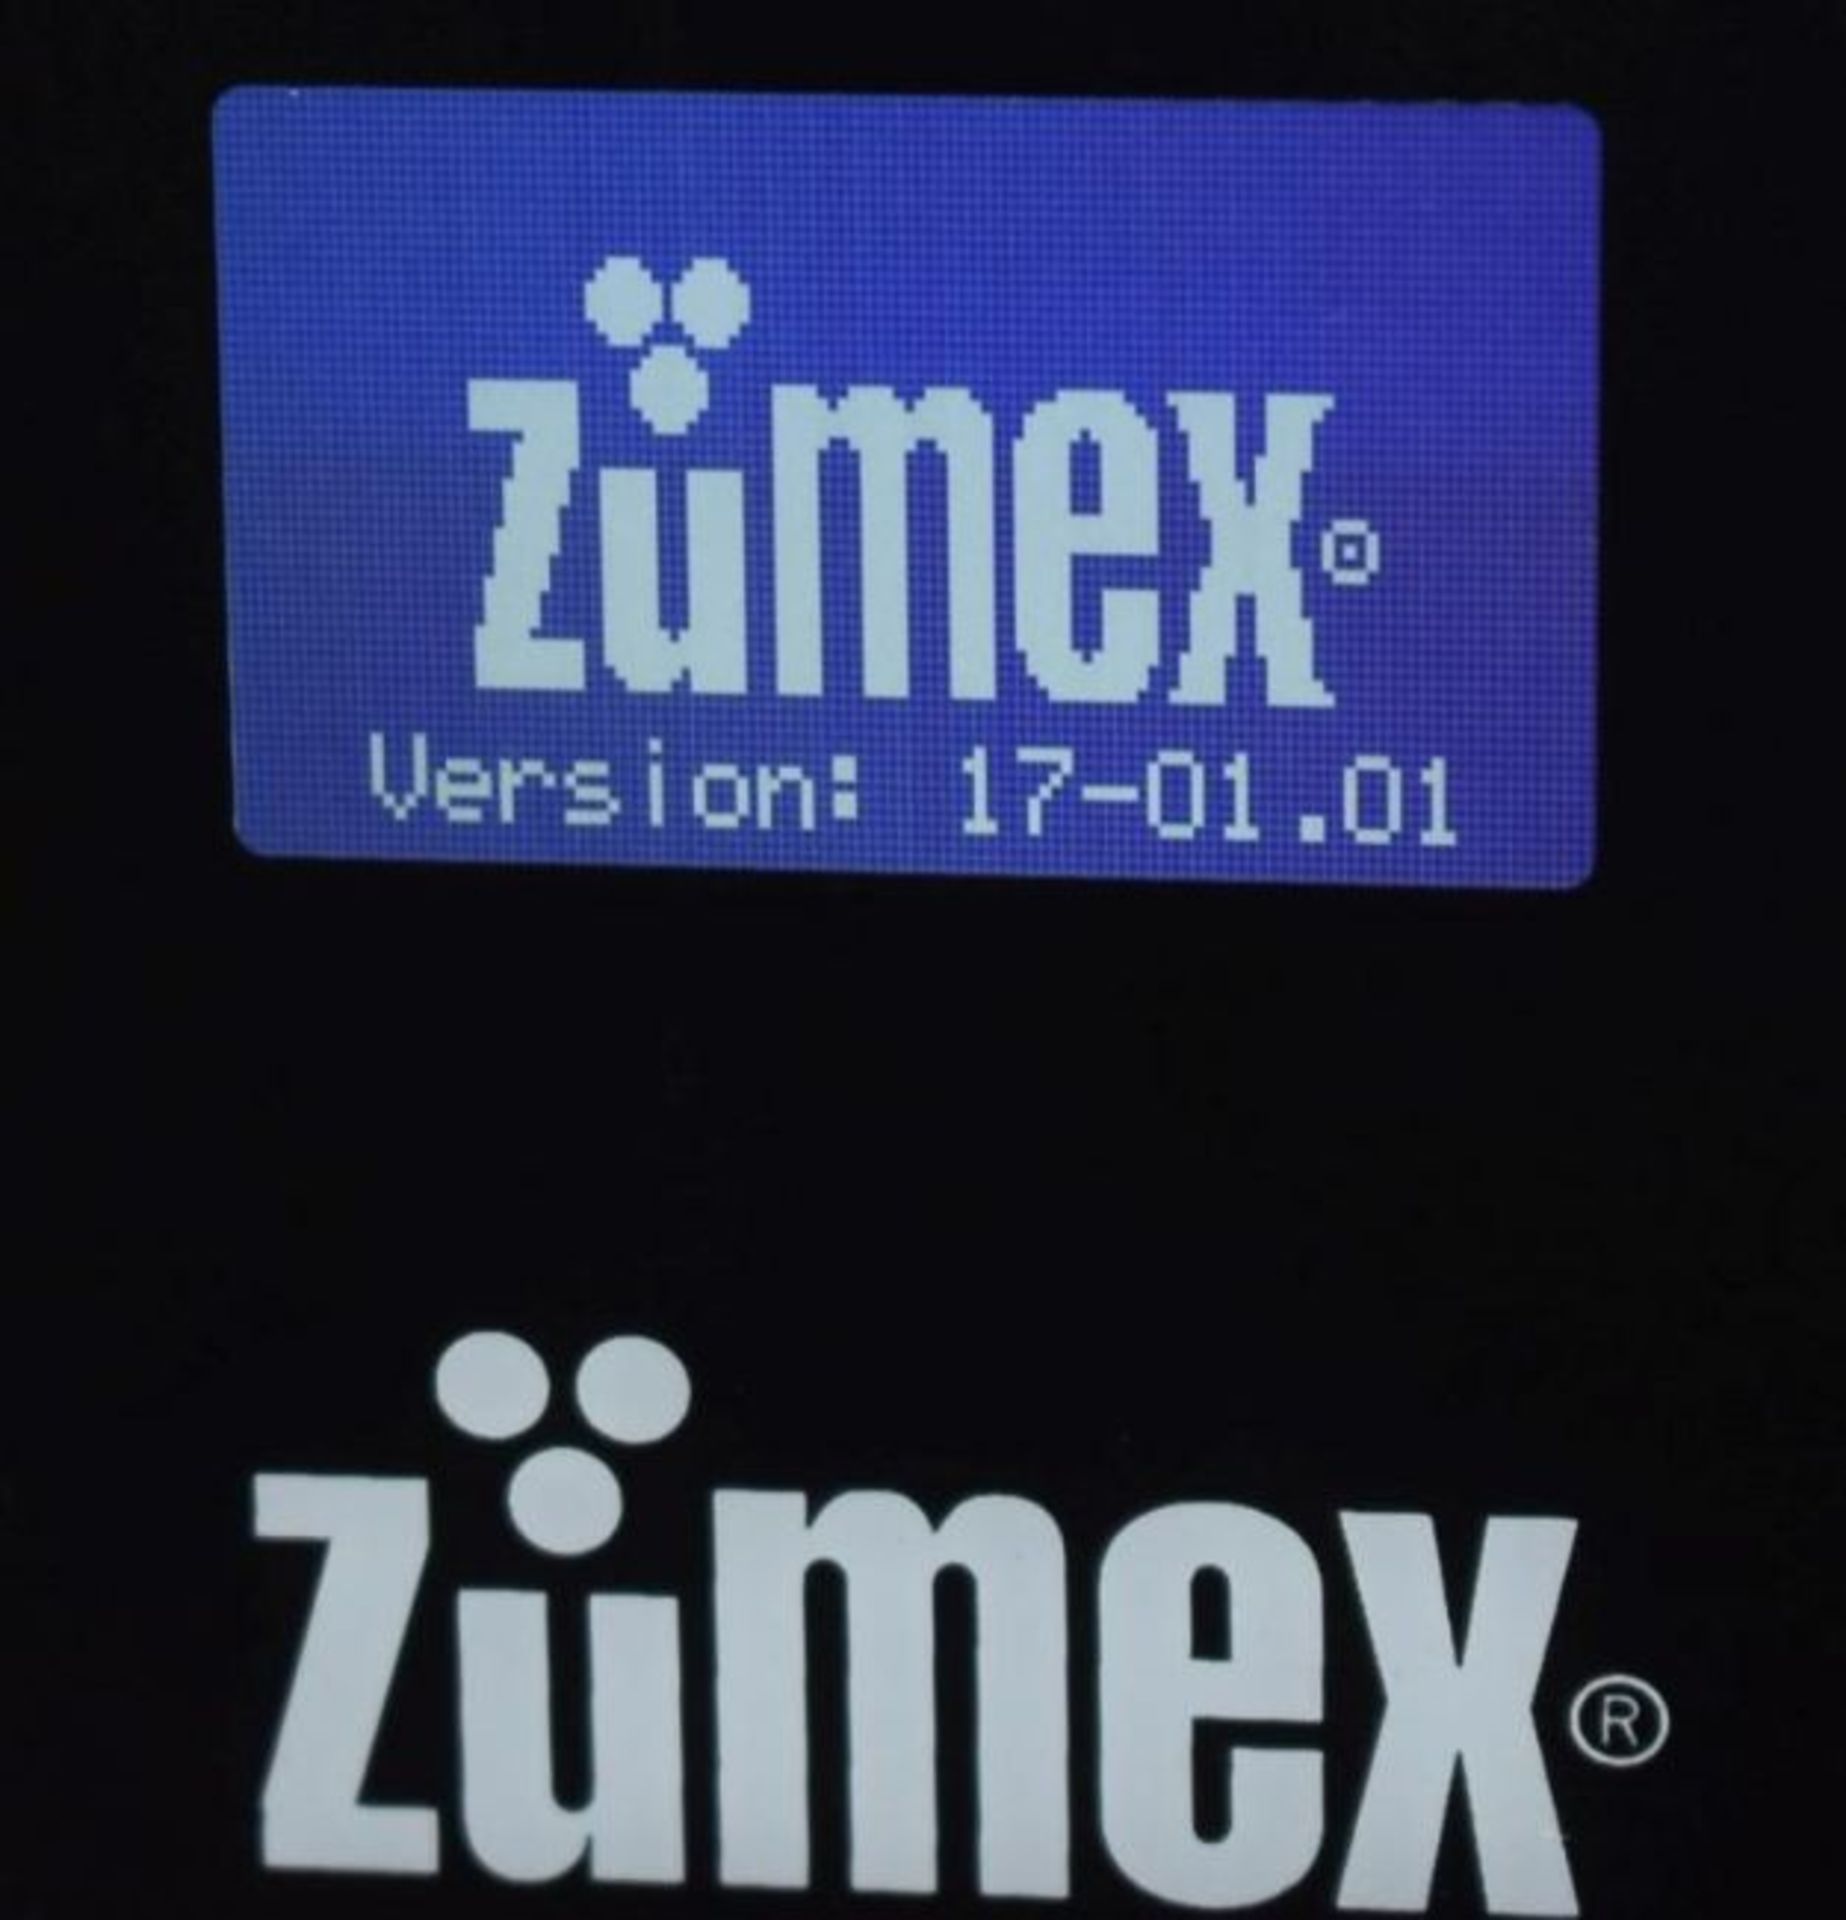 1 x Zumex Speed S +Plus Self-Service Podium Commercial Citrus Juicer - Manufactured in 2018 - - Image 14 of 20